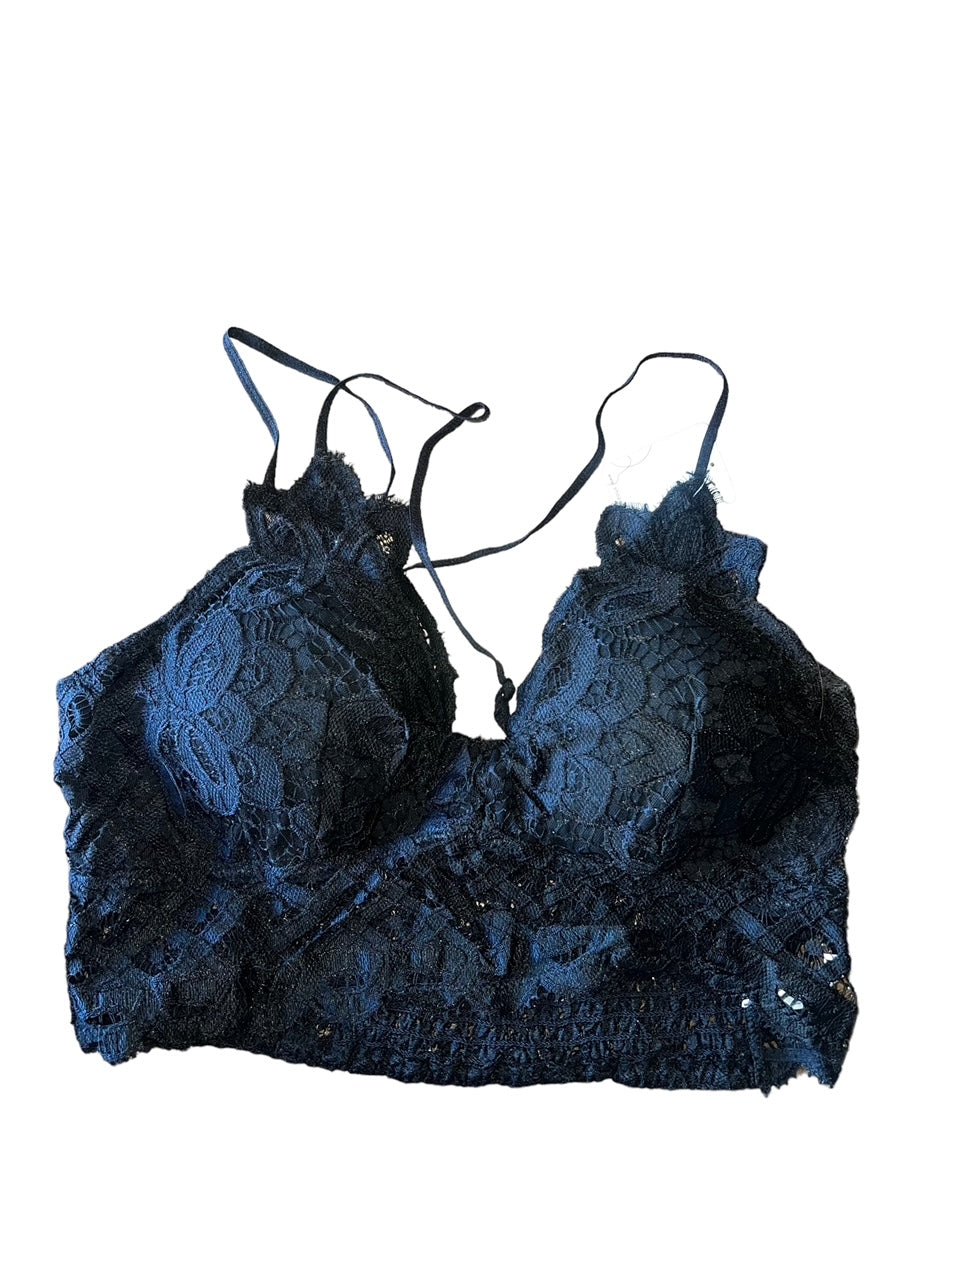 Undergarments | Bralette Crochet Lace